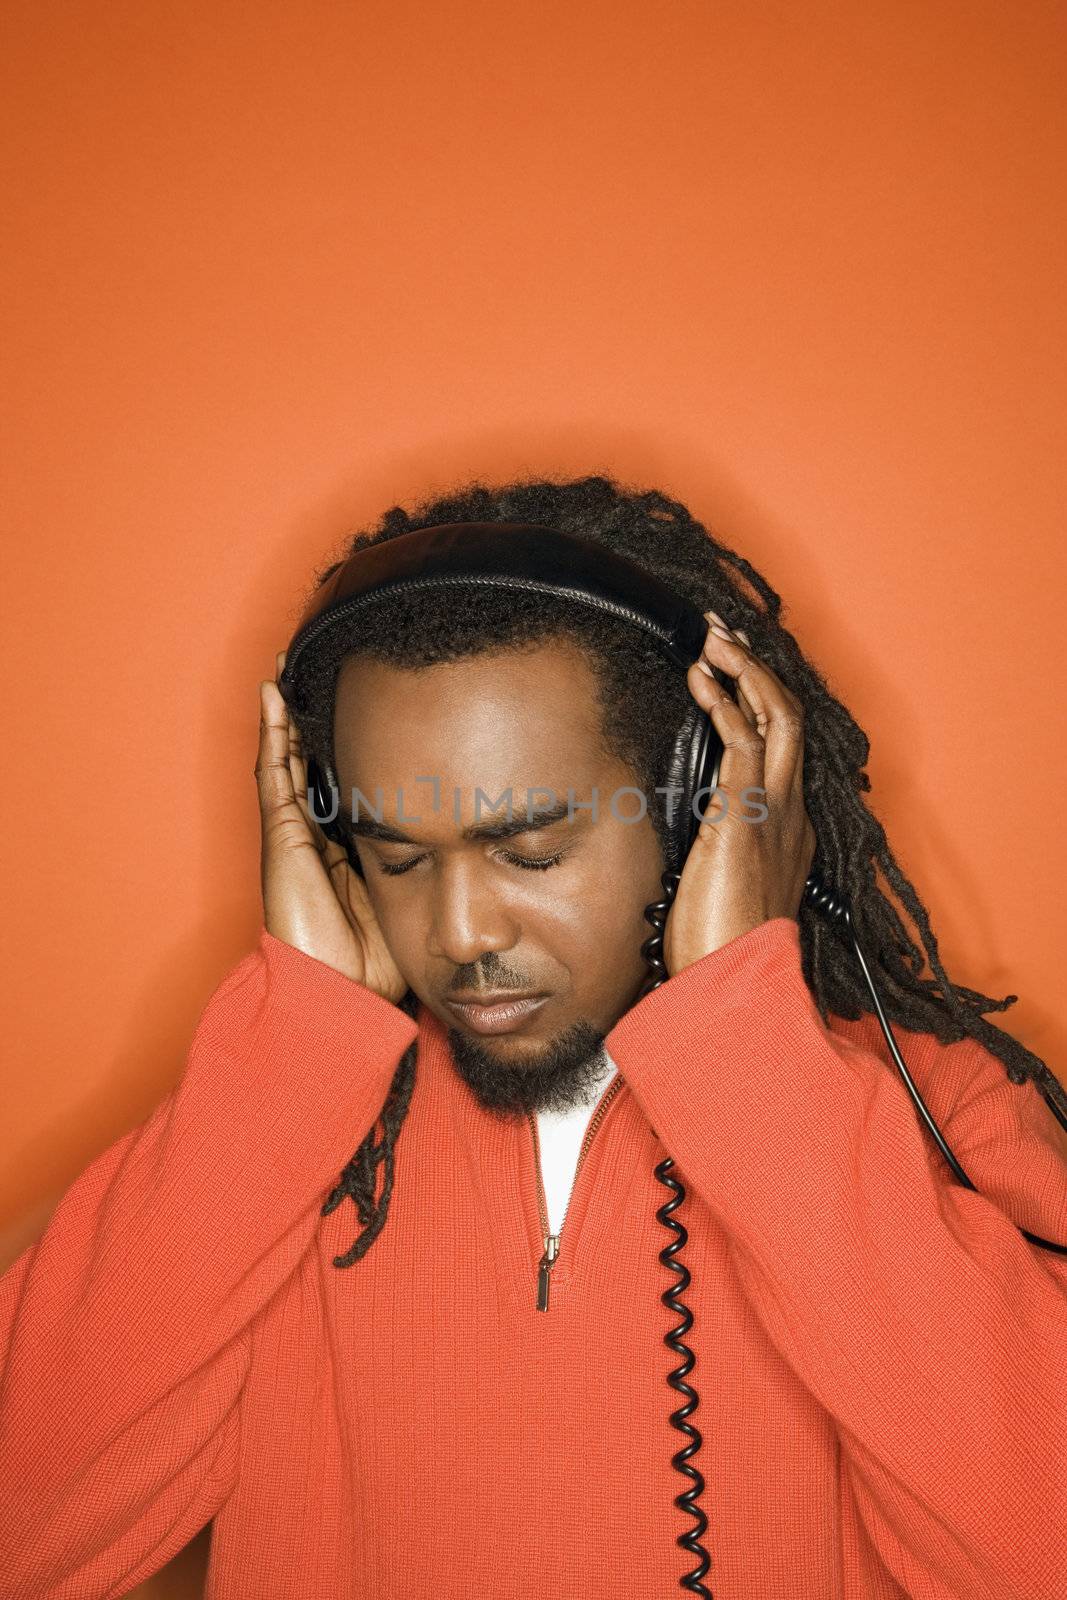 African-American mid-adult listening to headphones wearing orange clothing on orange background.